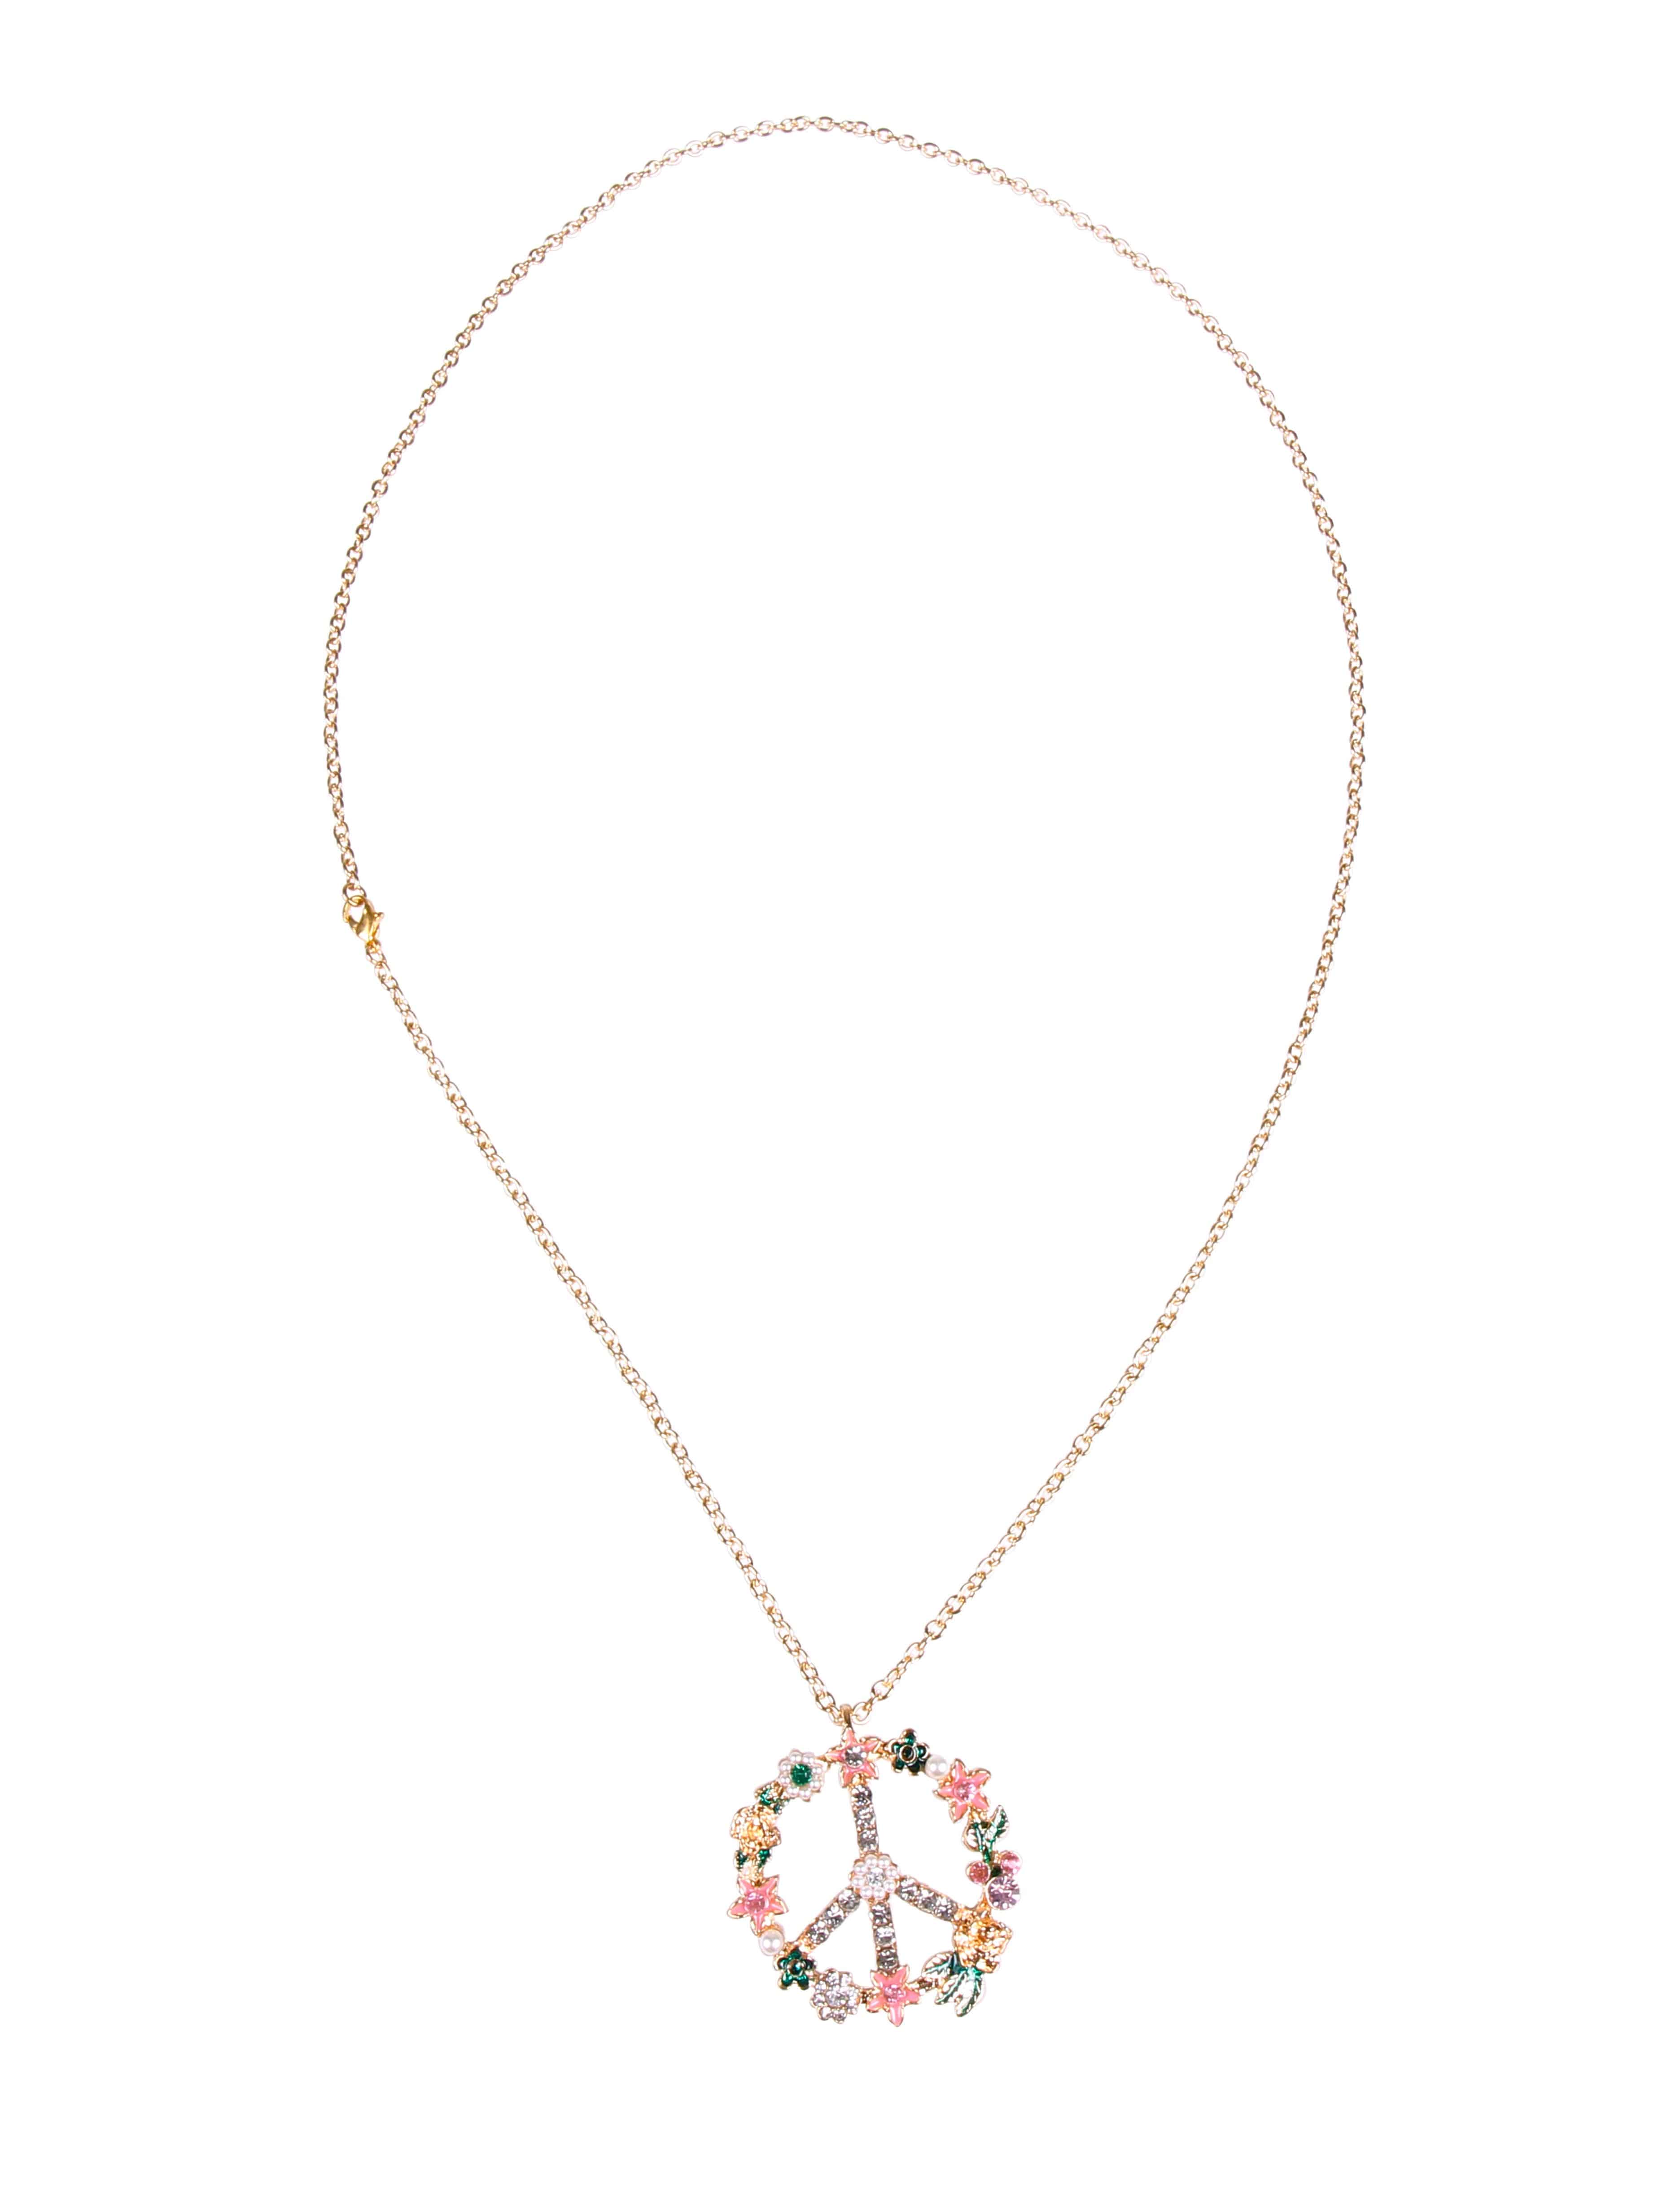 Halskette Peace de luxe mit Strass & Perlen